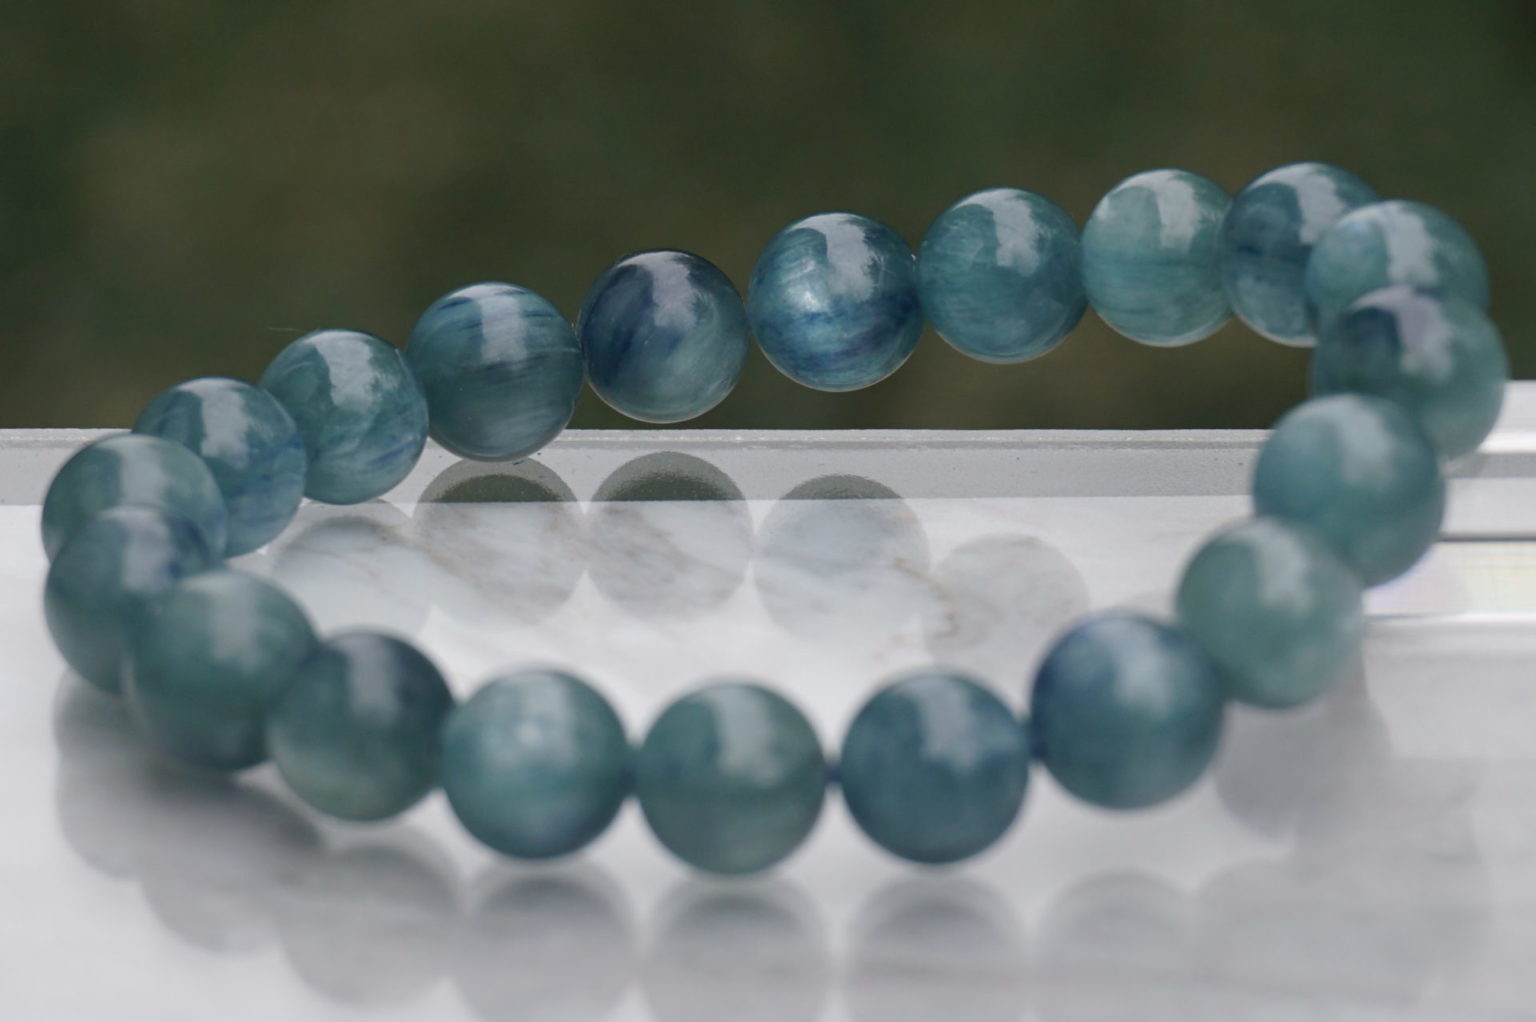 bluegreen-kyanite-bracelet01